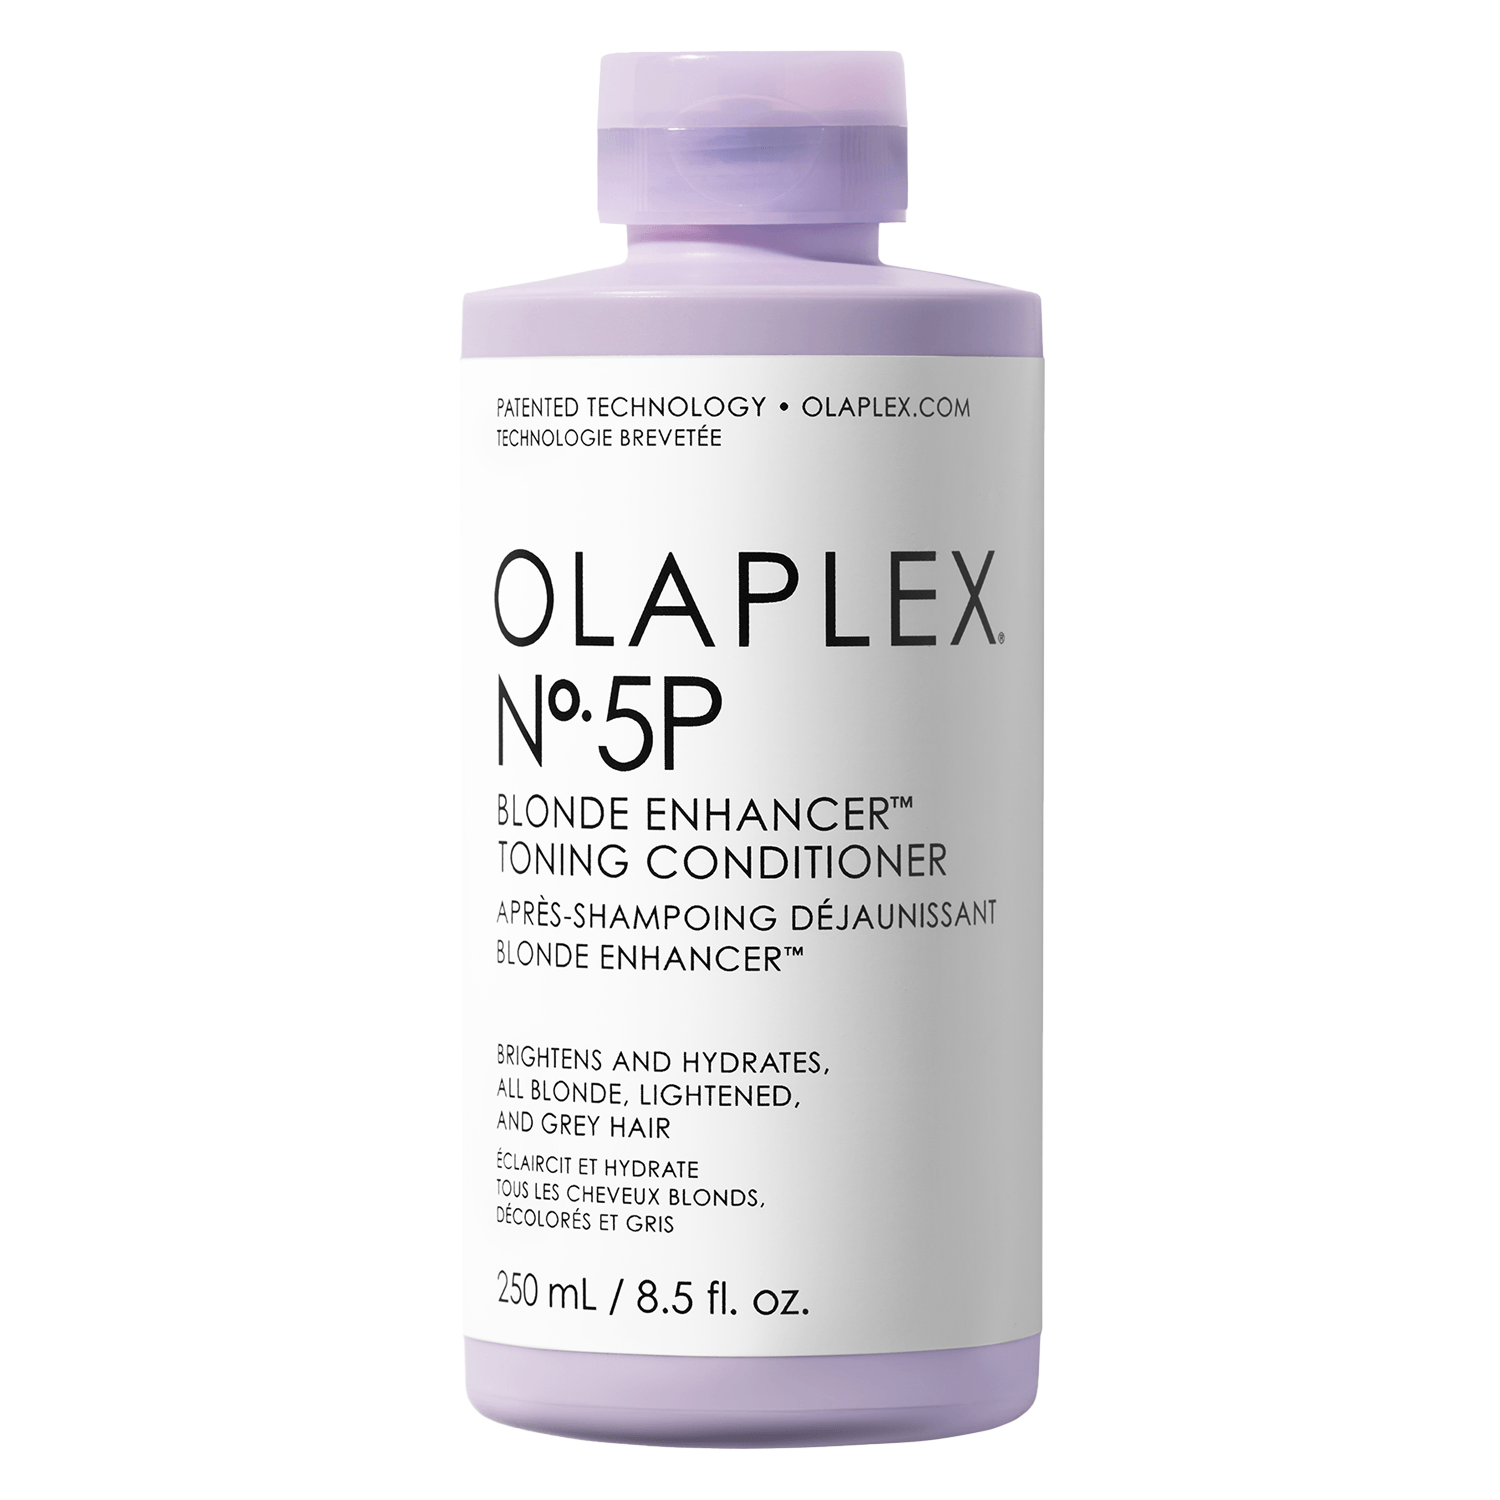 Product image from Olaplex - Blonde Enhancer Toning Conditioner No.5P